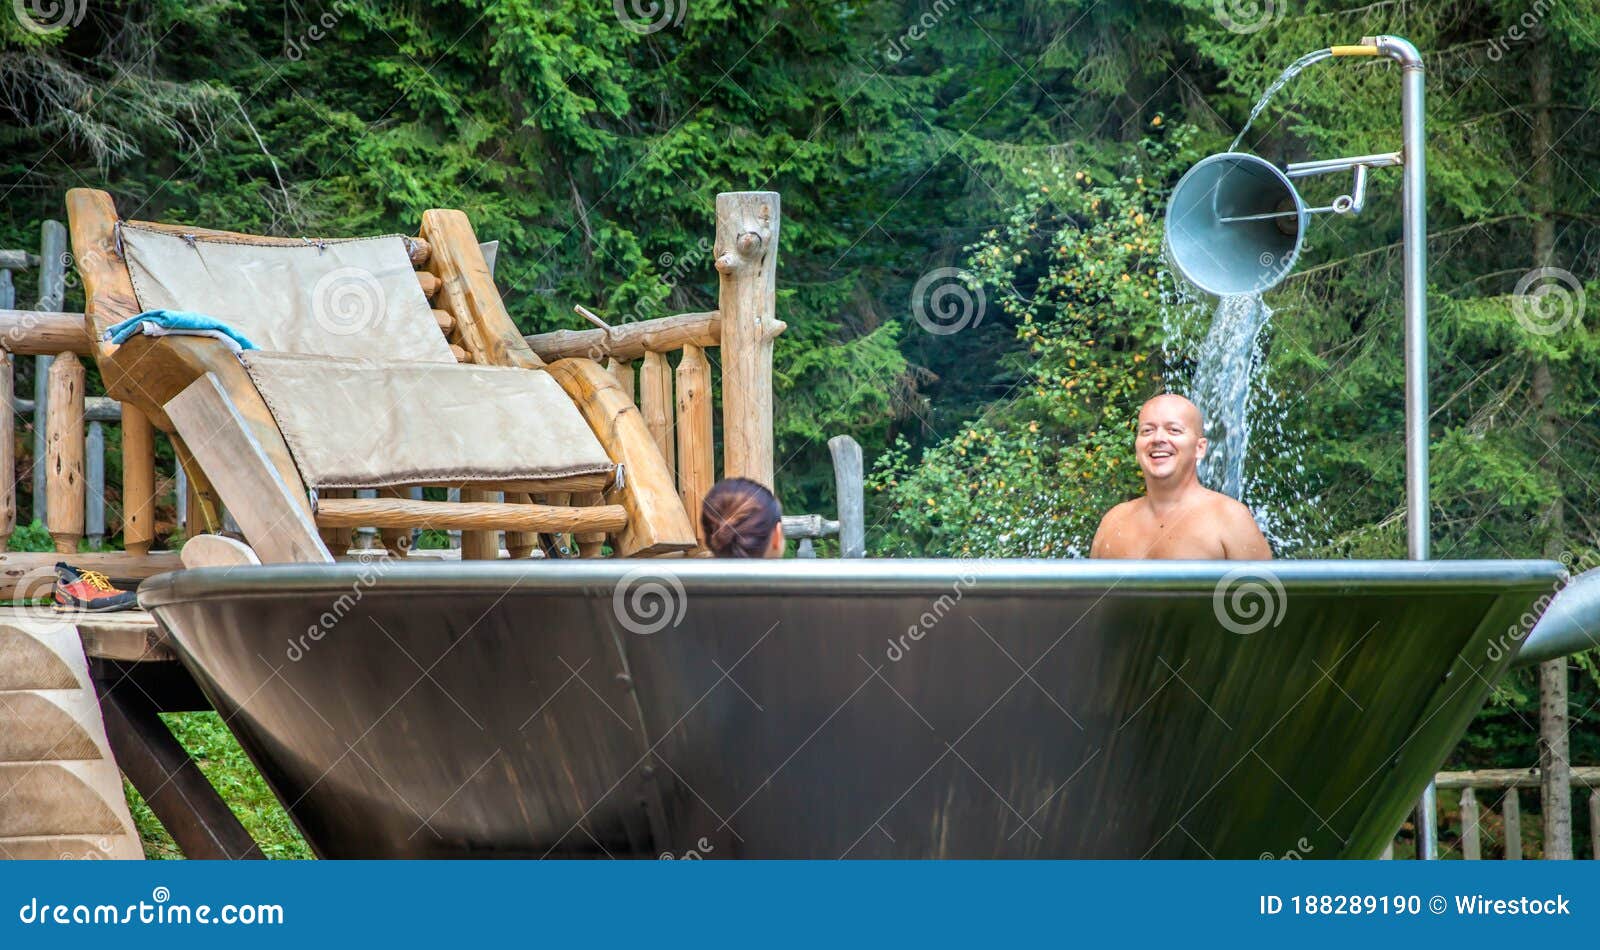 couple enjoying a good bath in a unique jakuzzi at hija glamping lake block in nova vos, slovenia